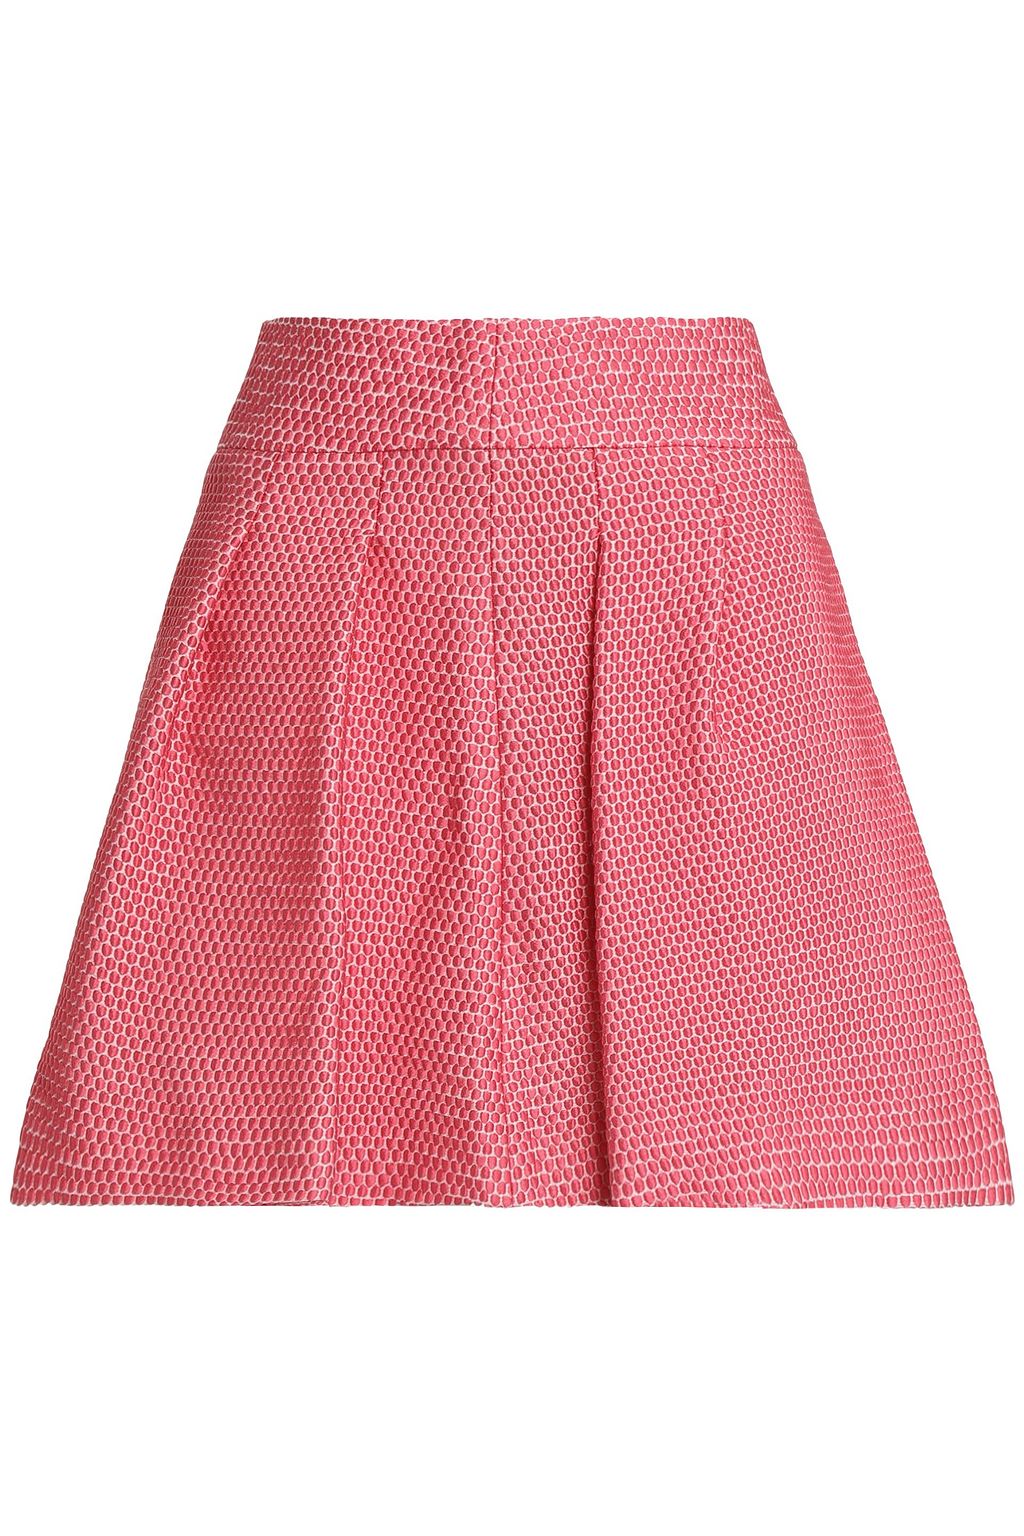 Жаккардовая мини-юбка REDVALENTINO, розовый redvalentino блузка